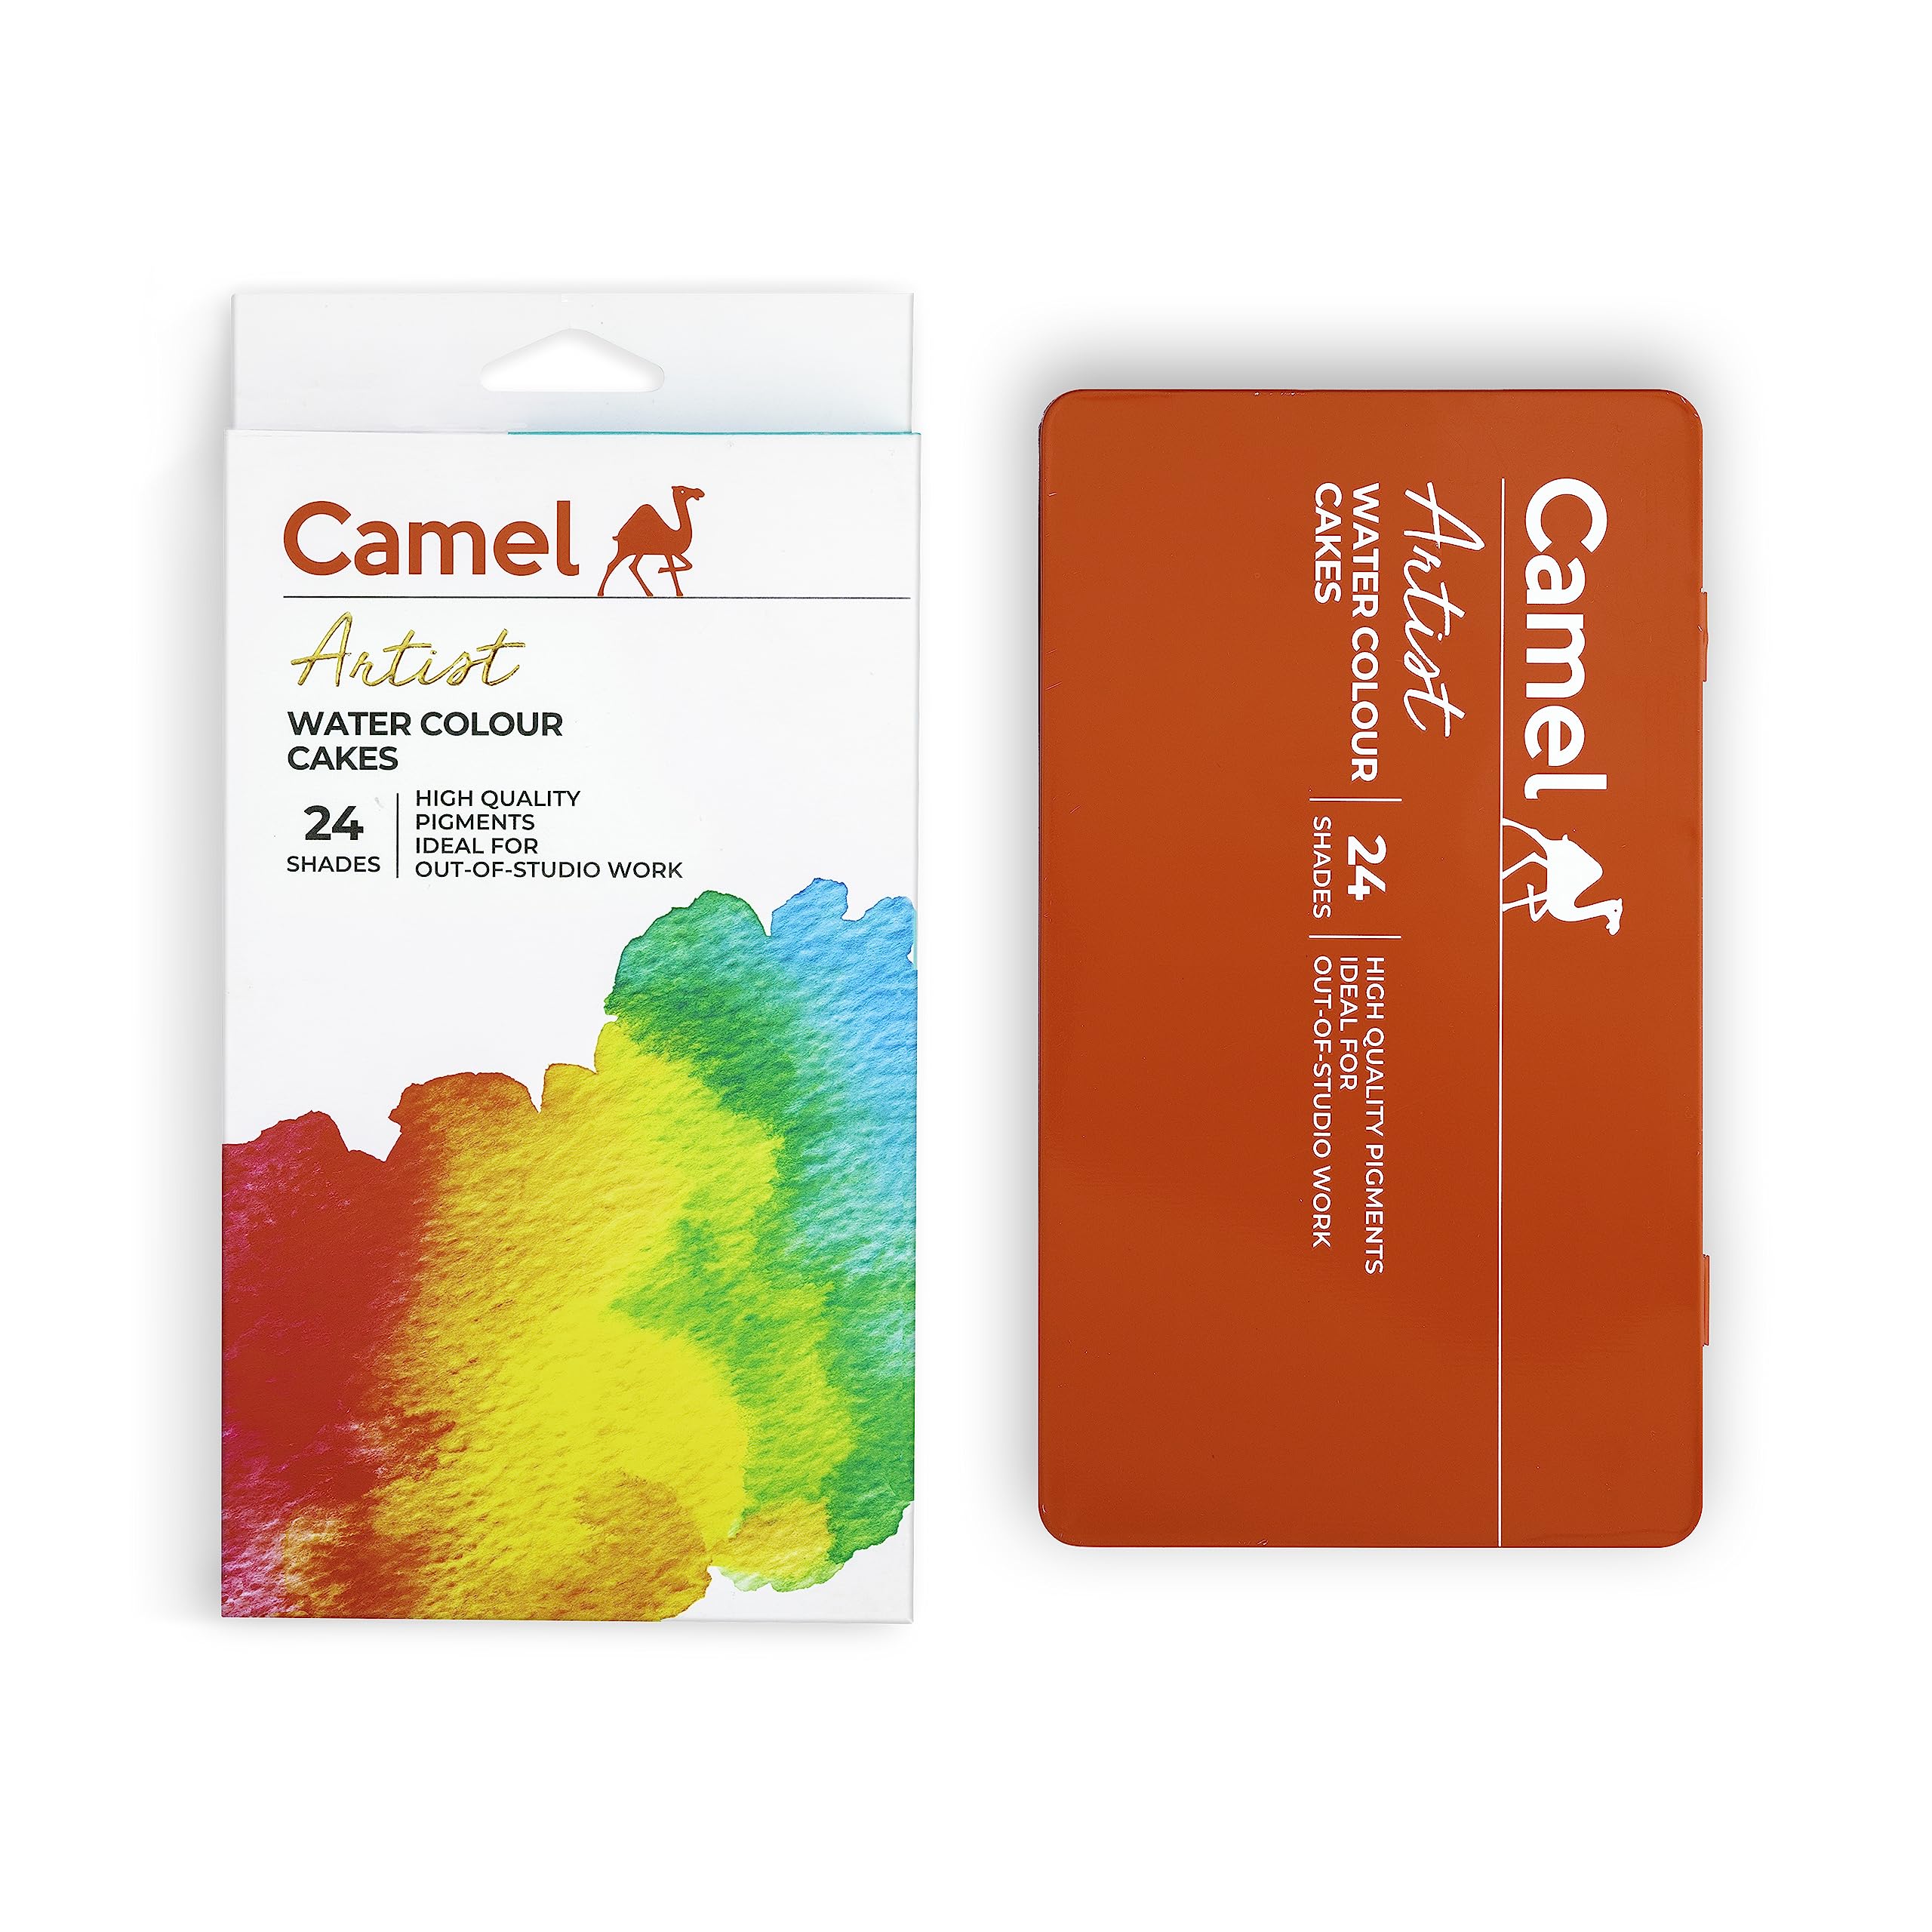 Art & Co. - Camel Artist Watercolor Cakes 48 shades... | Facebook